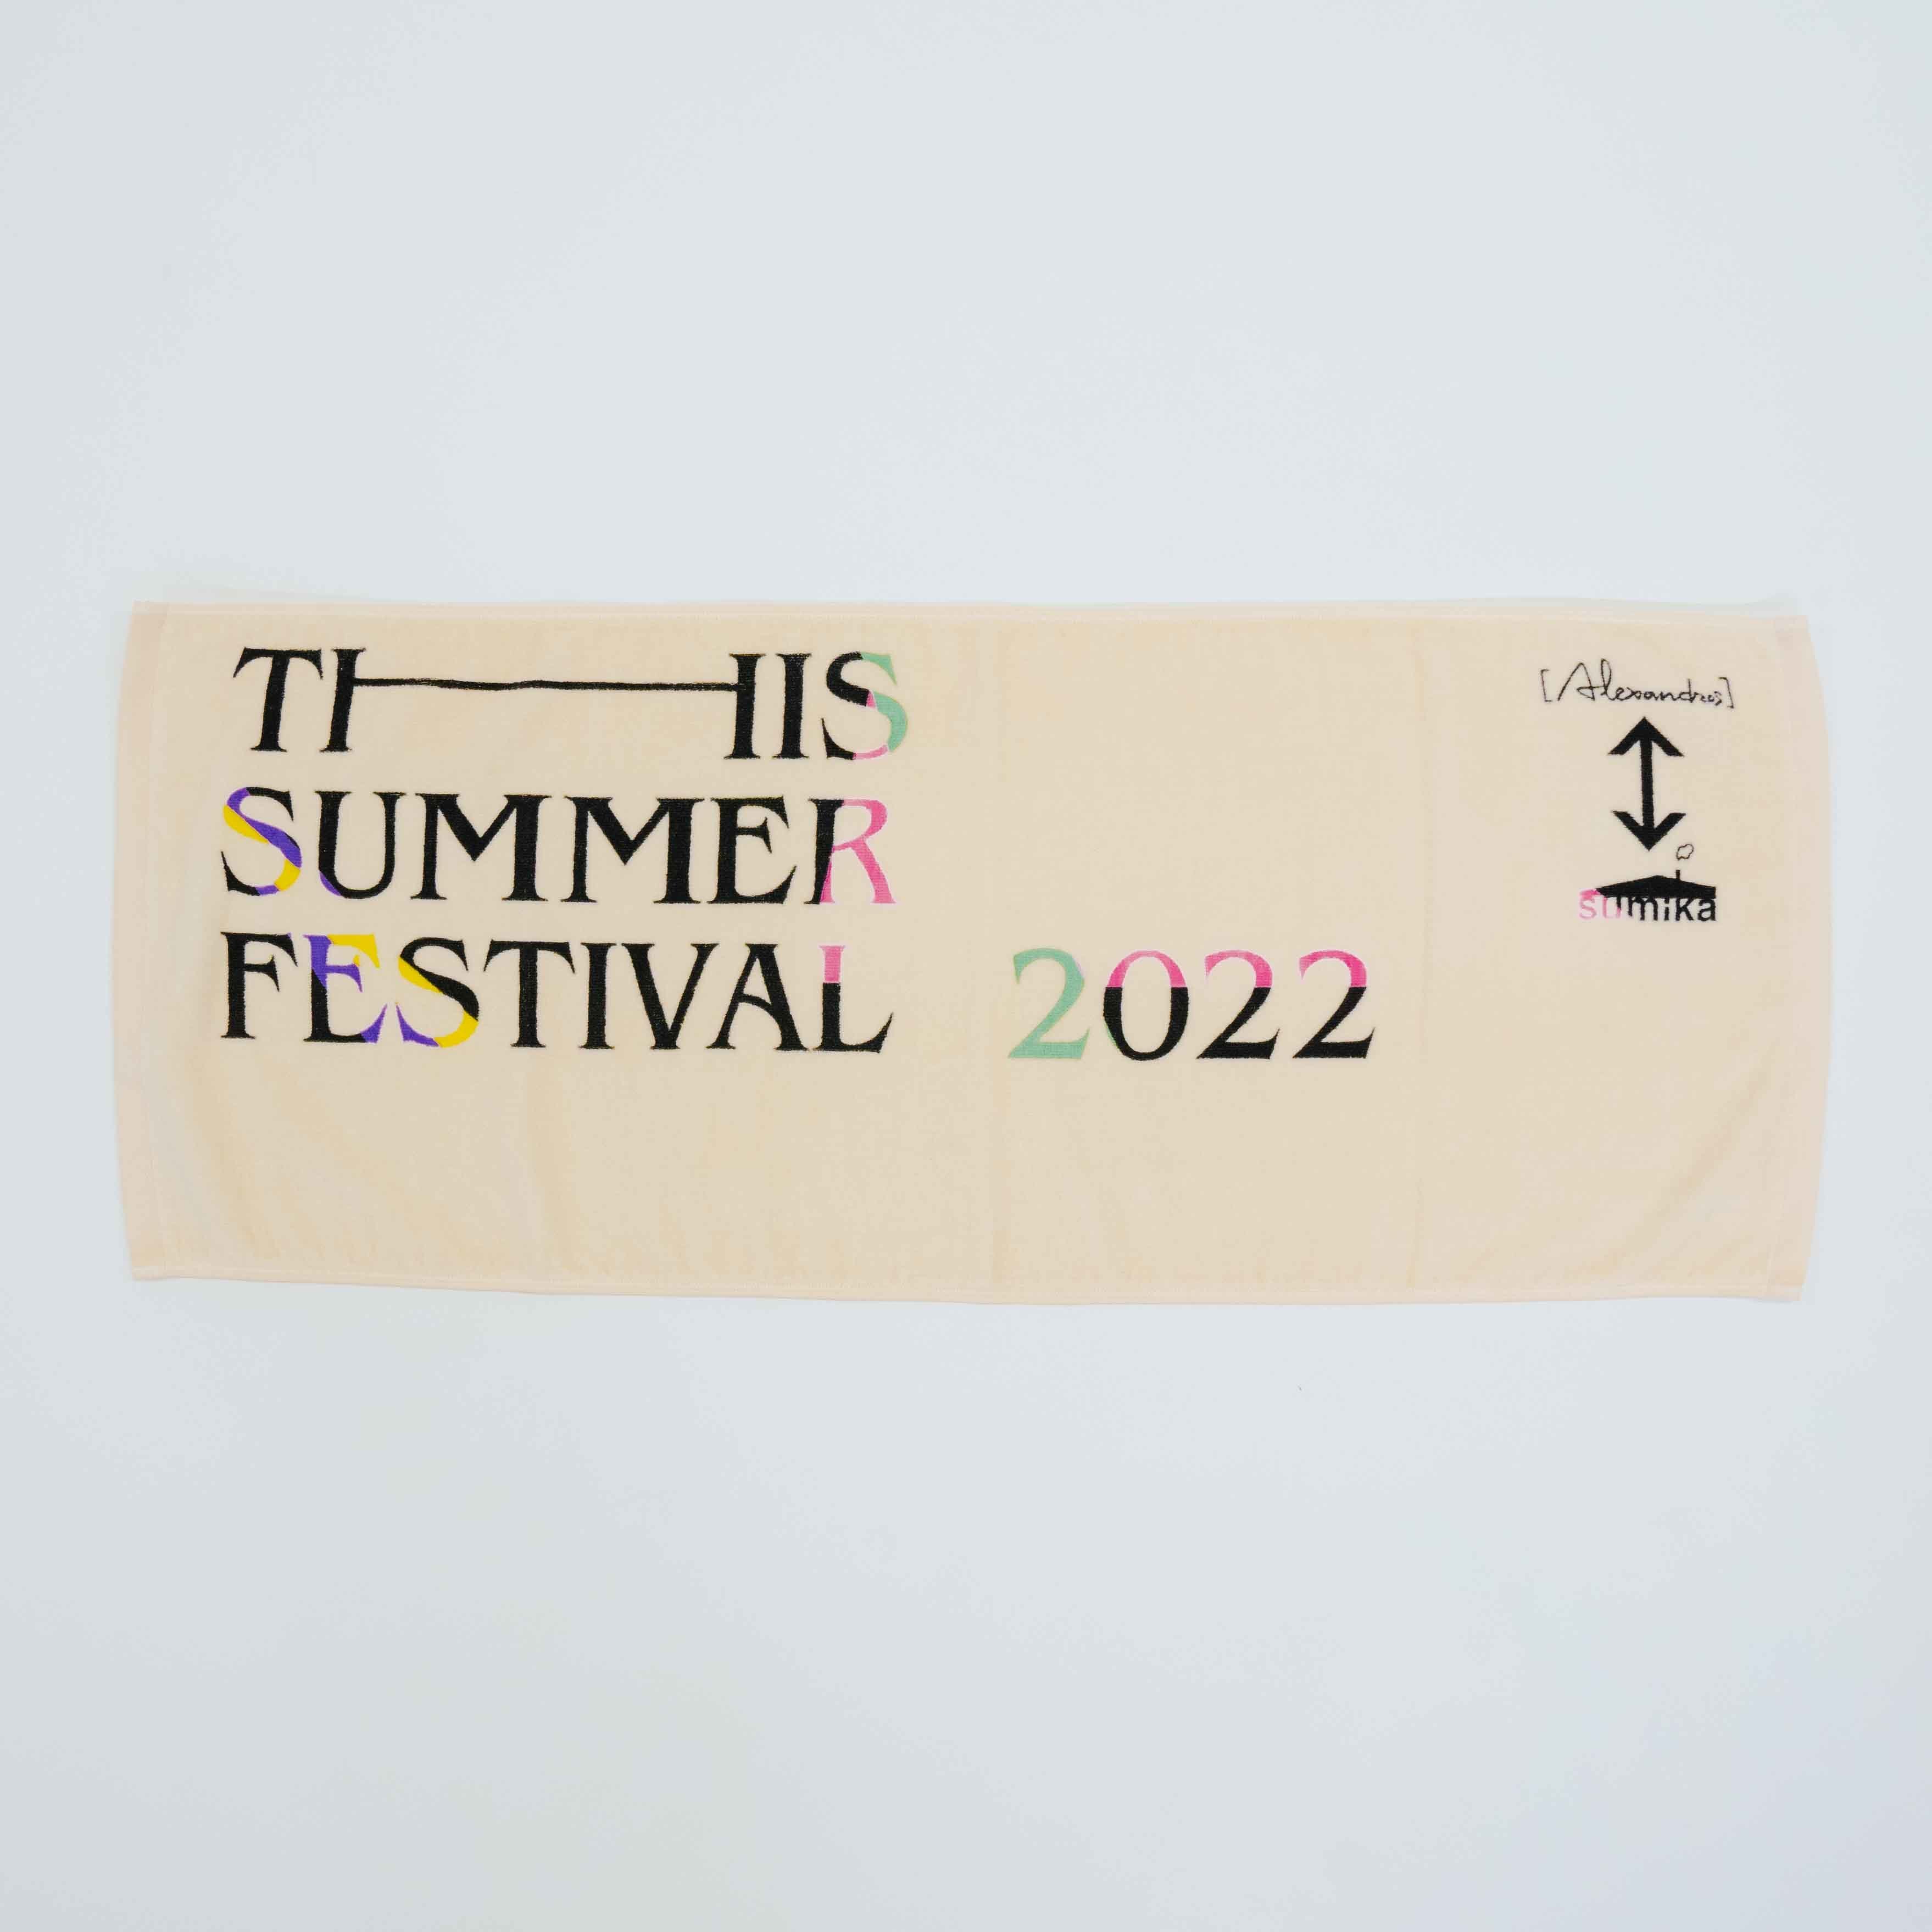 THIS SUMMER FESTIVAL 2022 Logo Towel